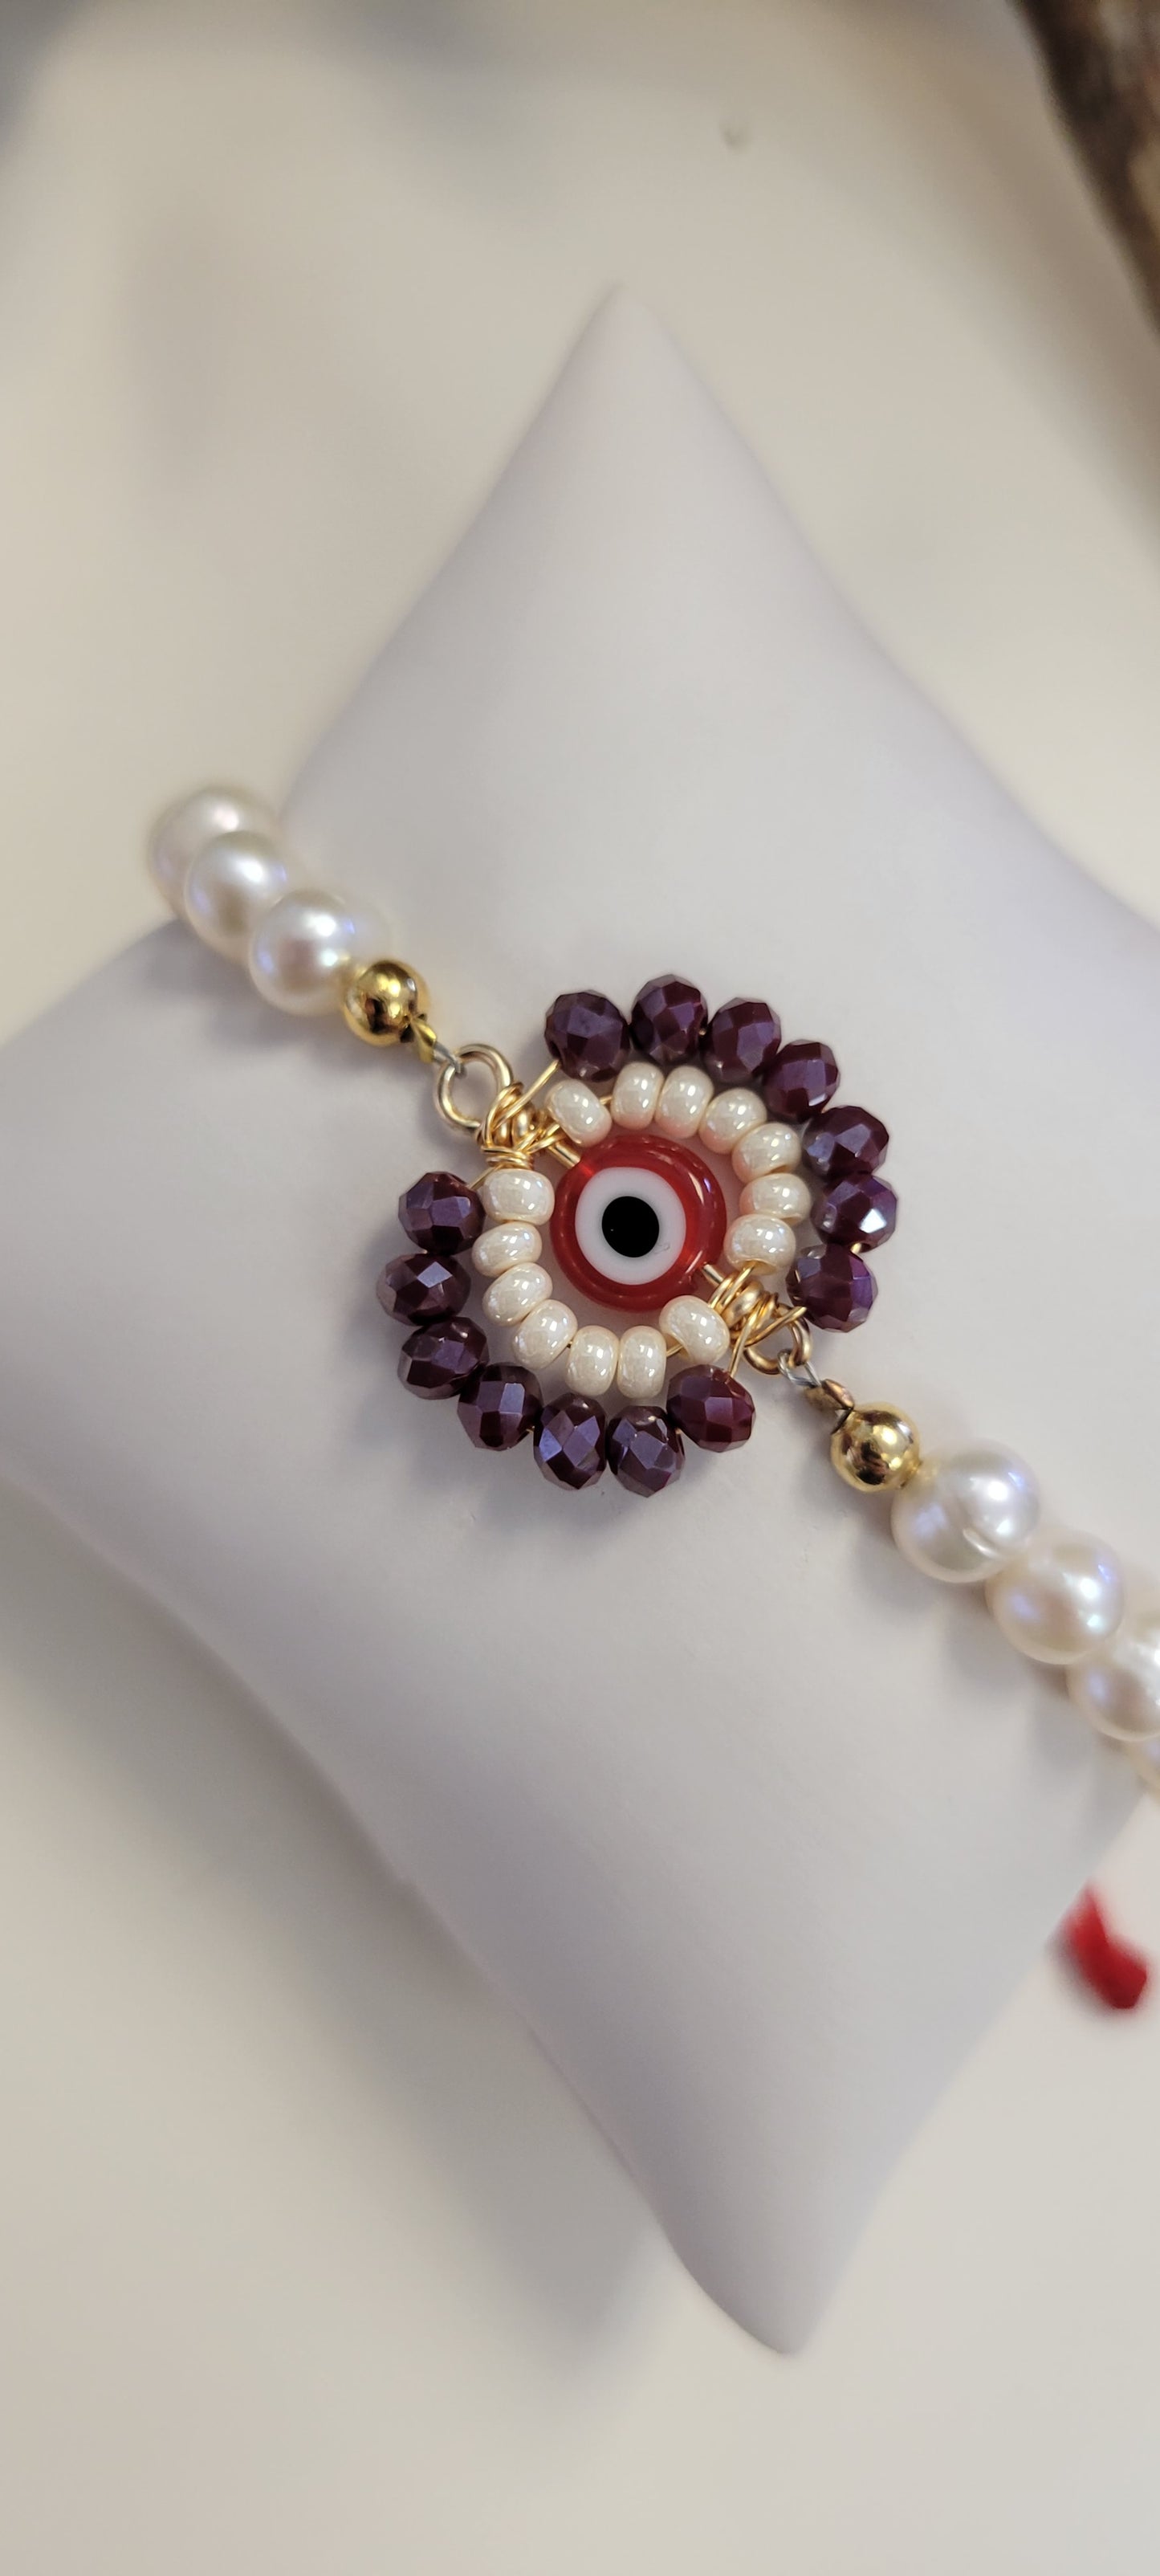 Red eye Pearl Bracelet